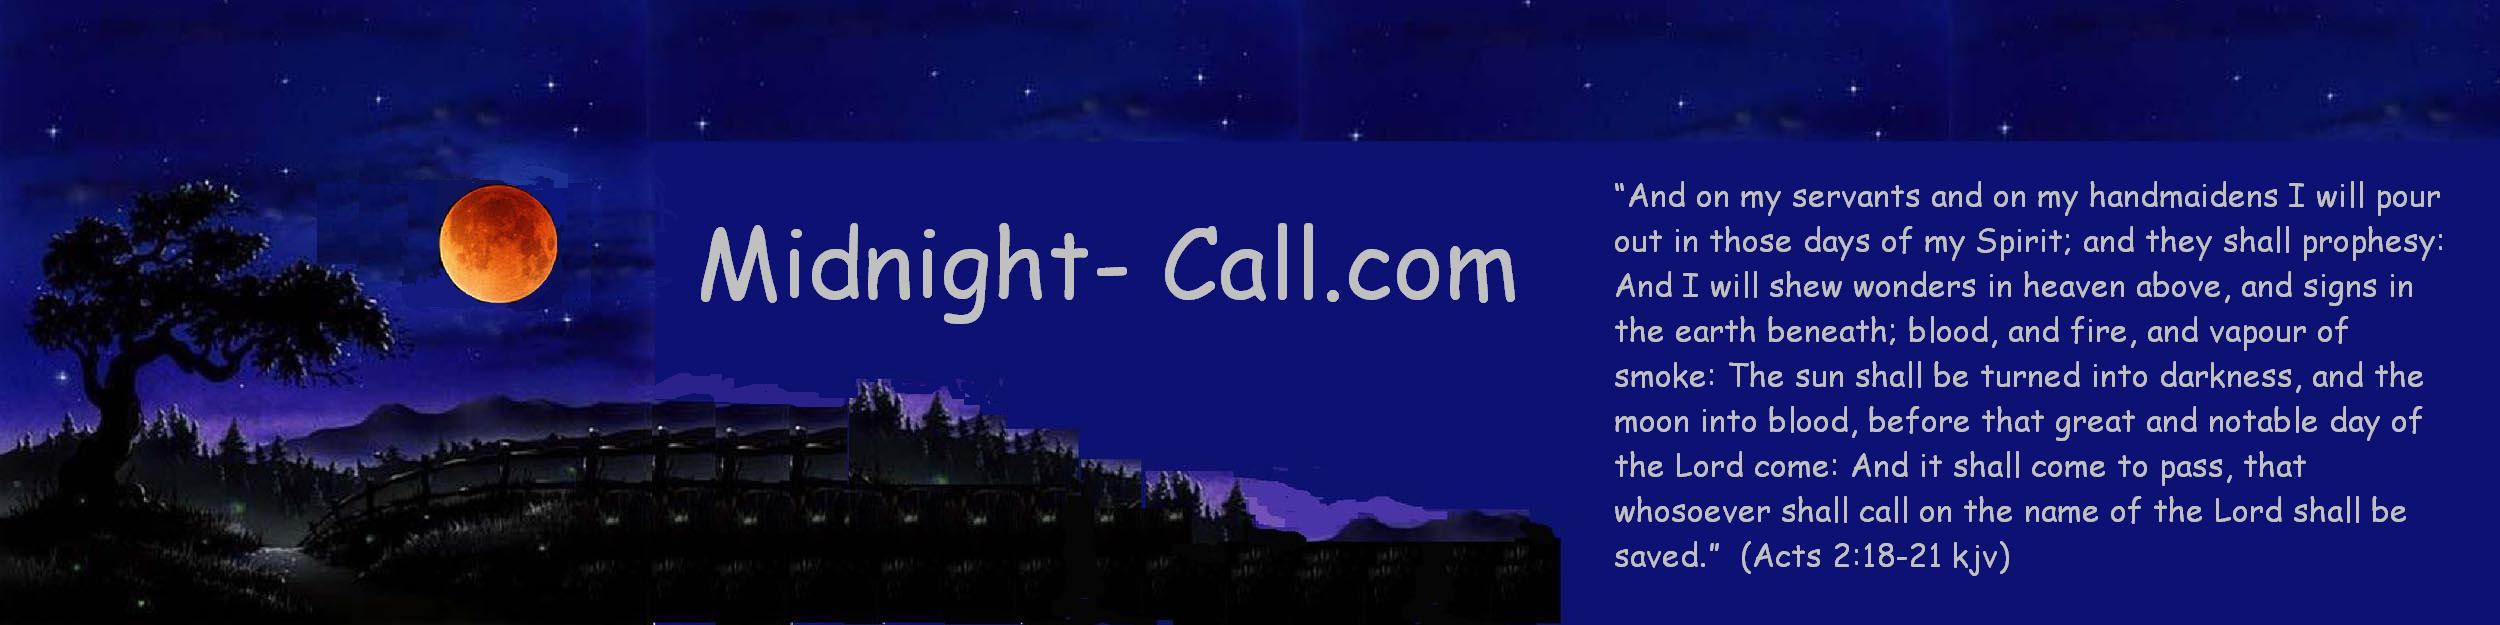 Midnight-Call.com